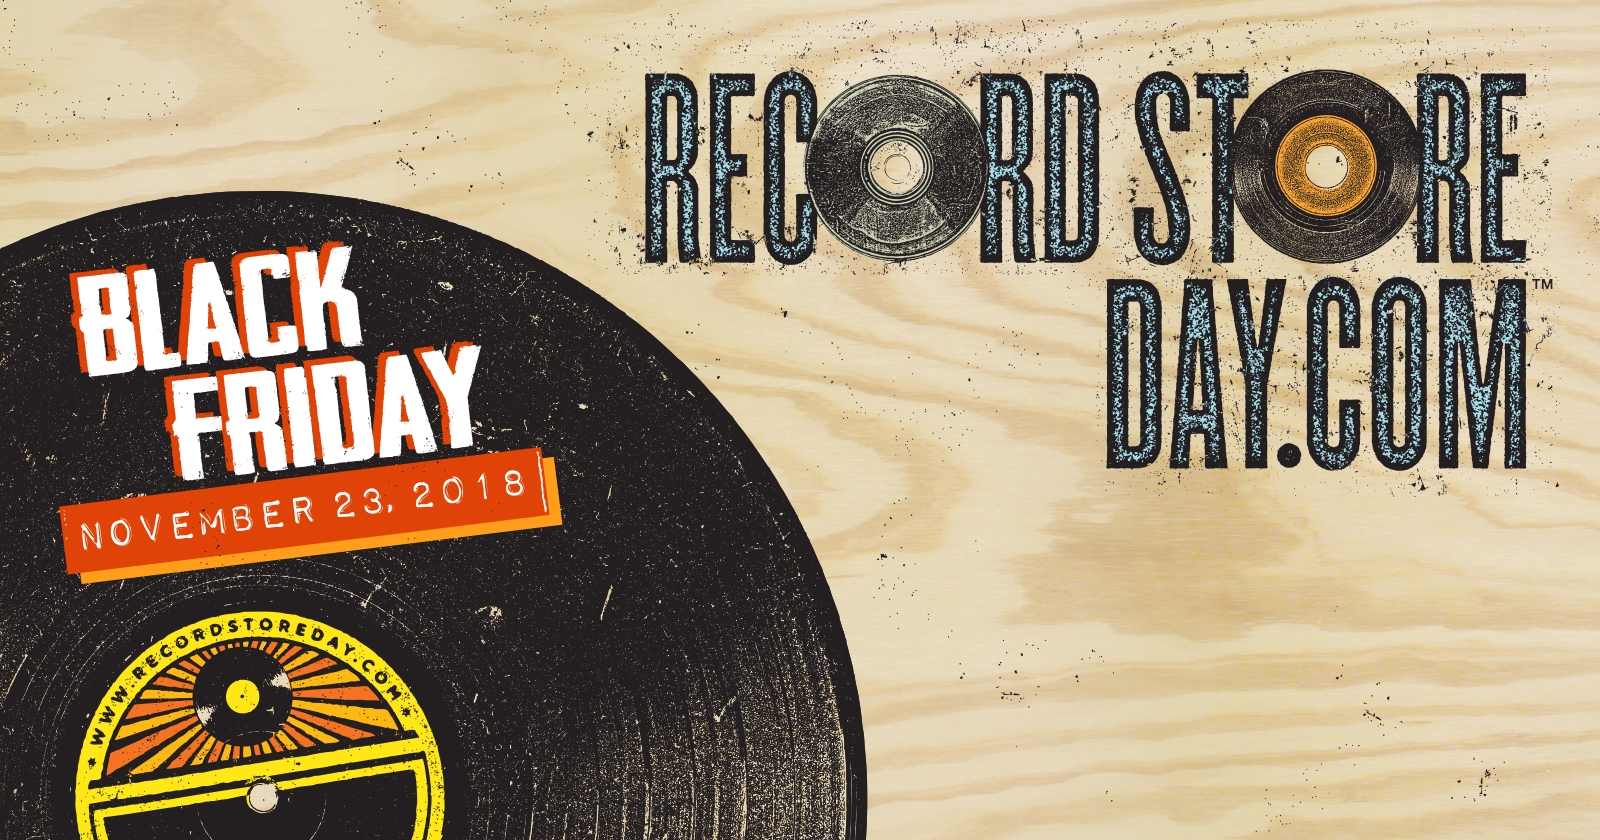 Black Friday Record Store Day Grooveground Coffeebar